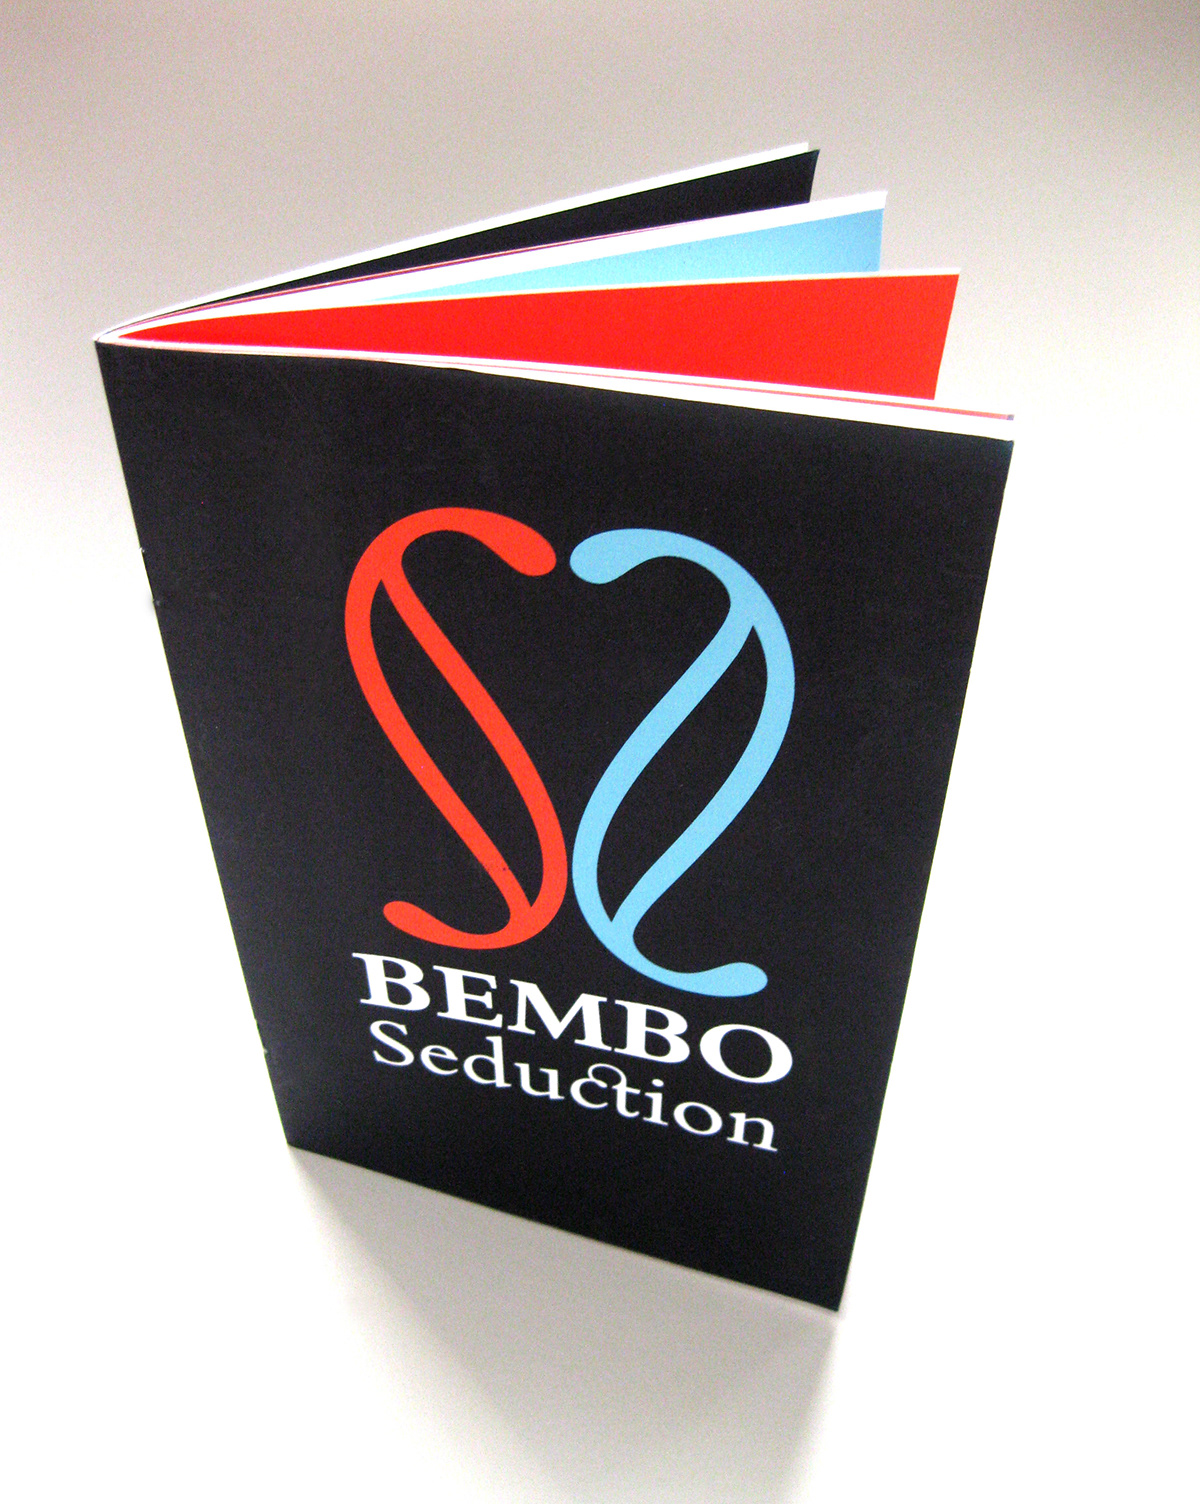 Bembo Typeface font monotype Booklet seduction italian sexy